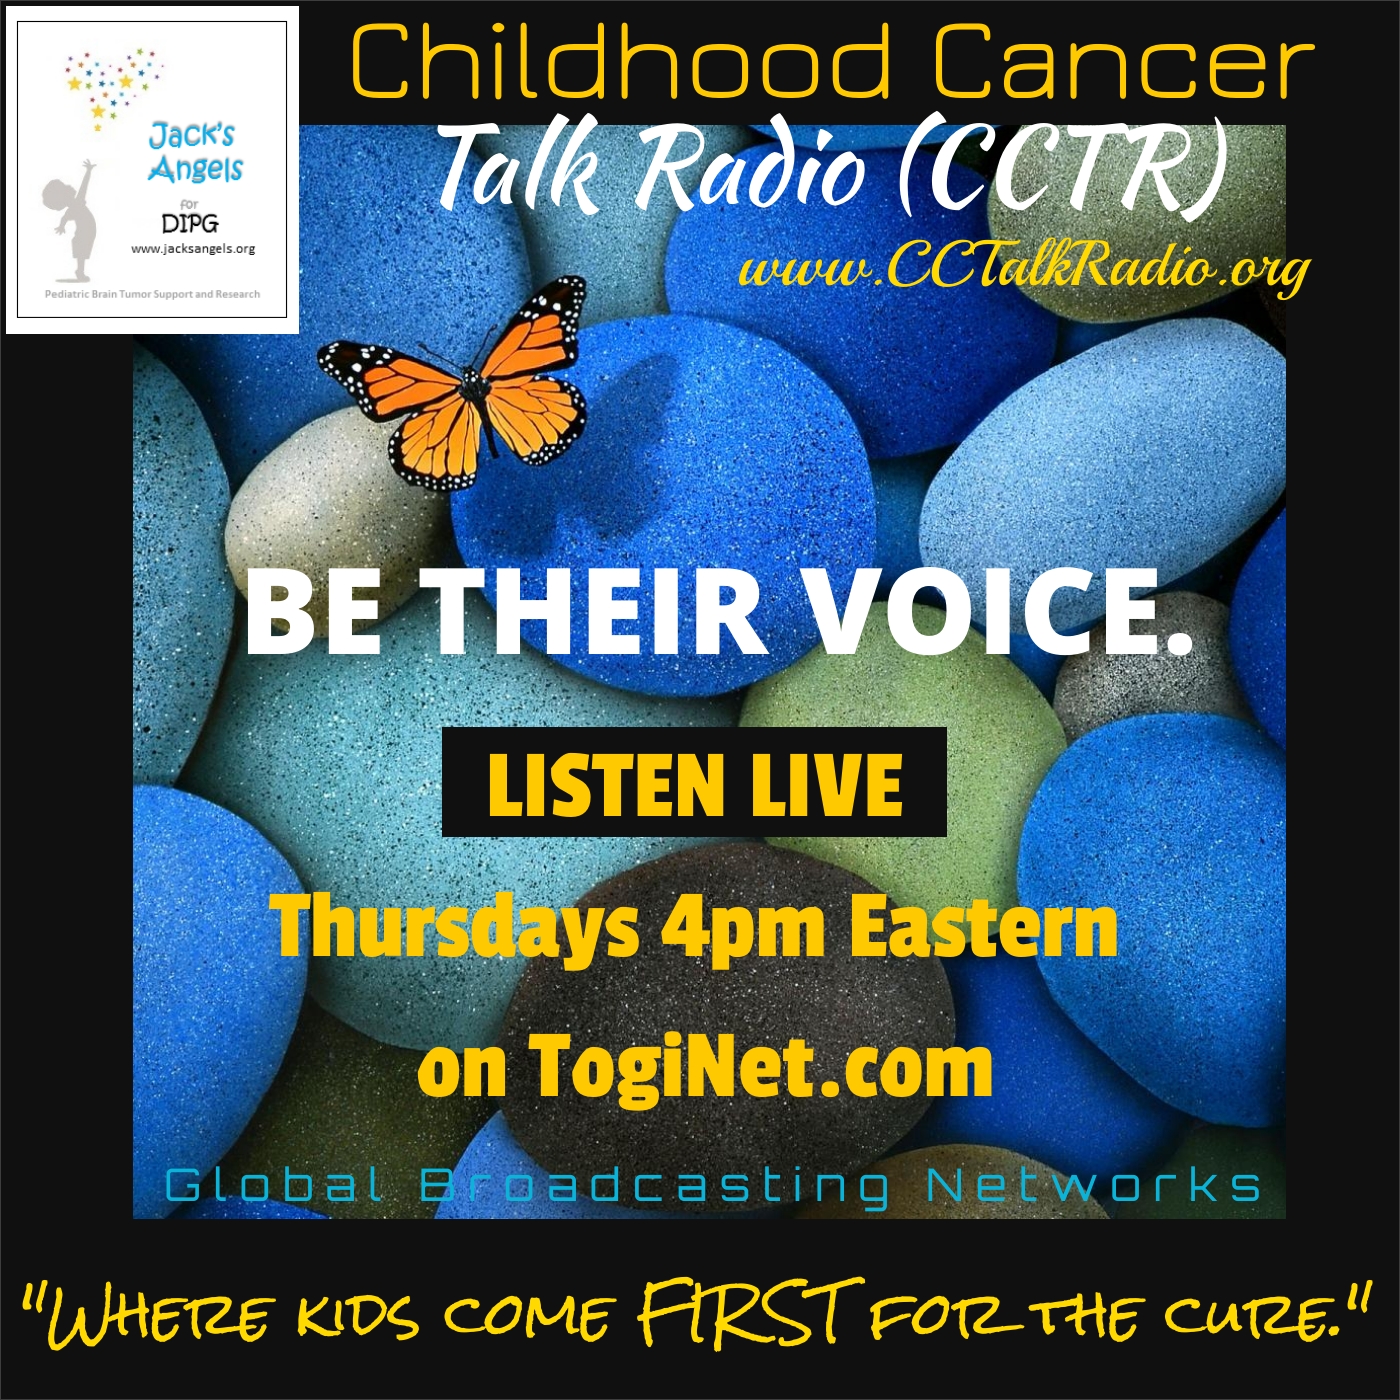 Childhood Cancer Talk Radio